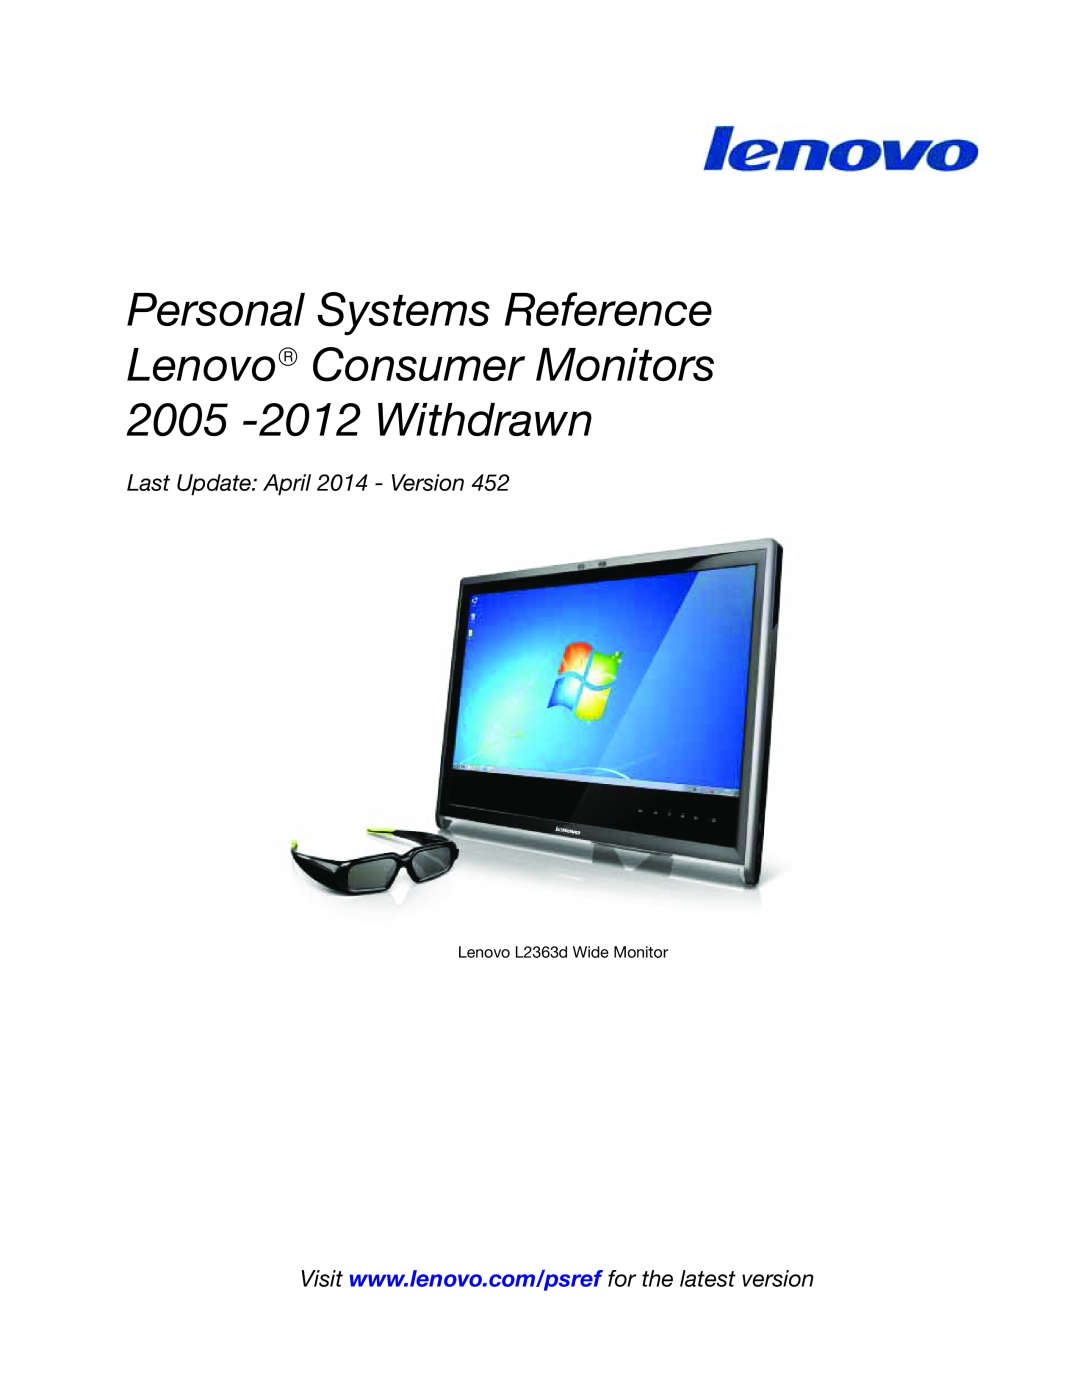 Lenovo L2363D manual December 2011 - Version, Lenovo L2363d Wide Monitor 